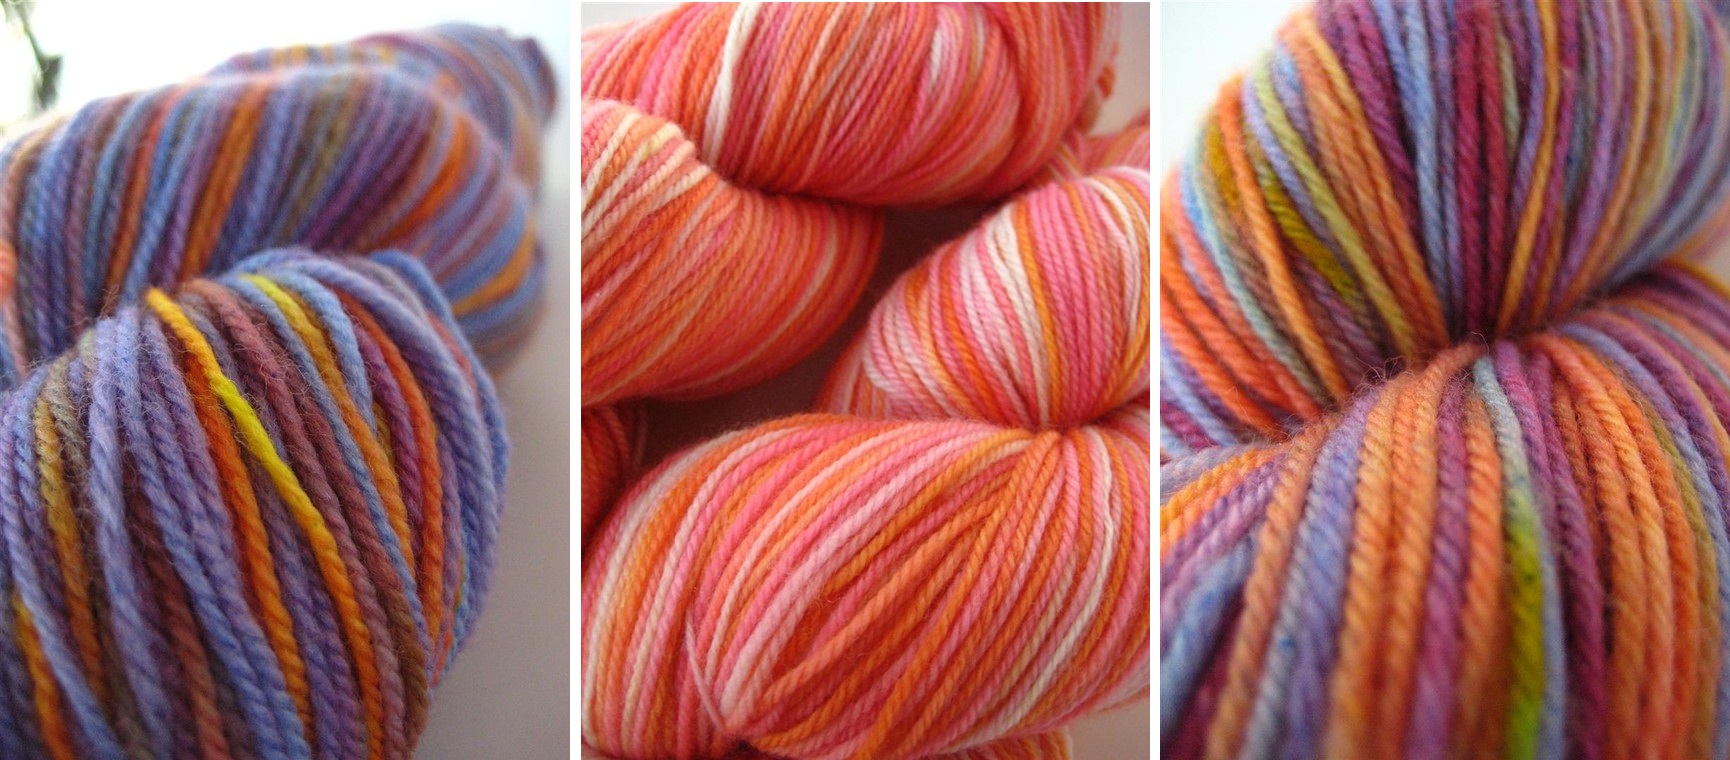 yarn, sock yarn, knitting, crochet, hand-dyed, handdyed